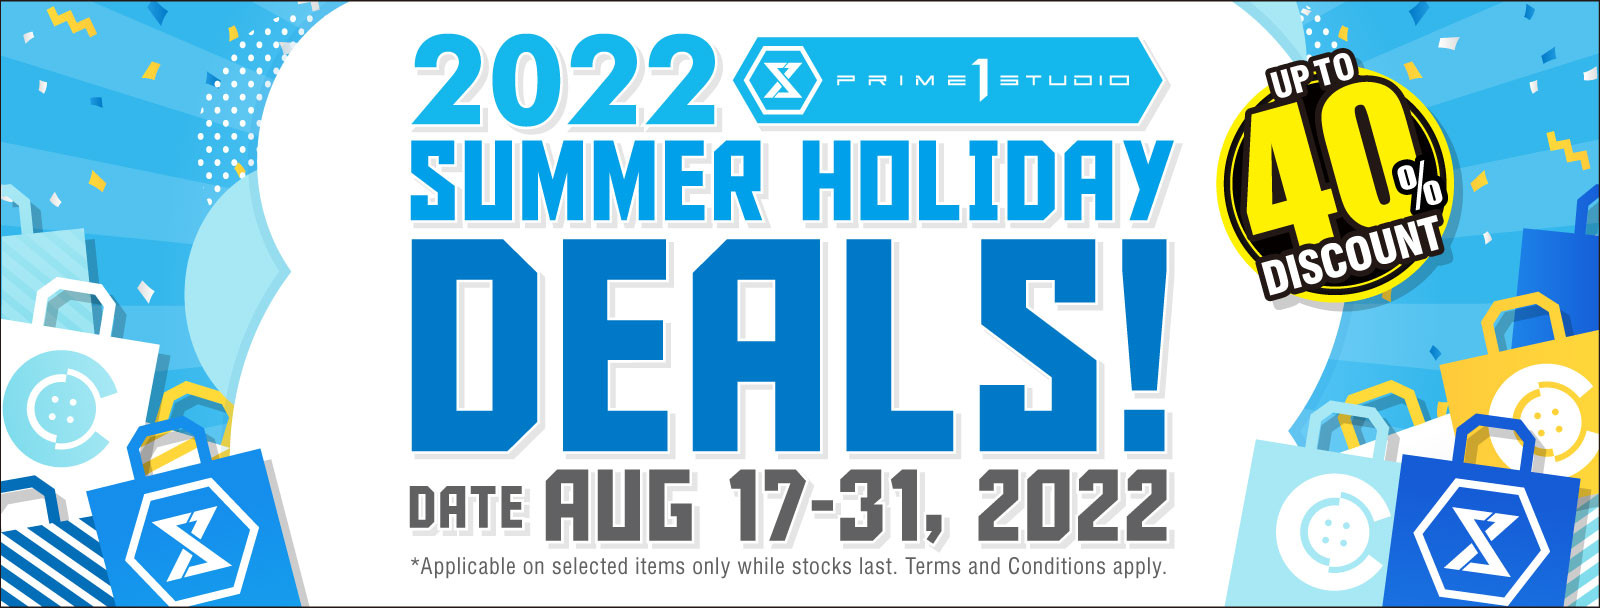 Summer Holiday Deals 2022